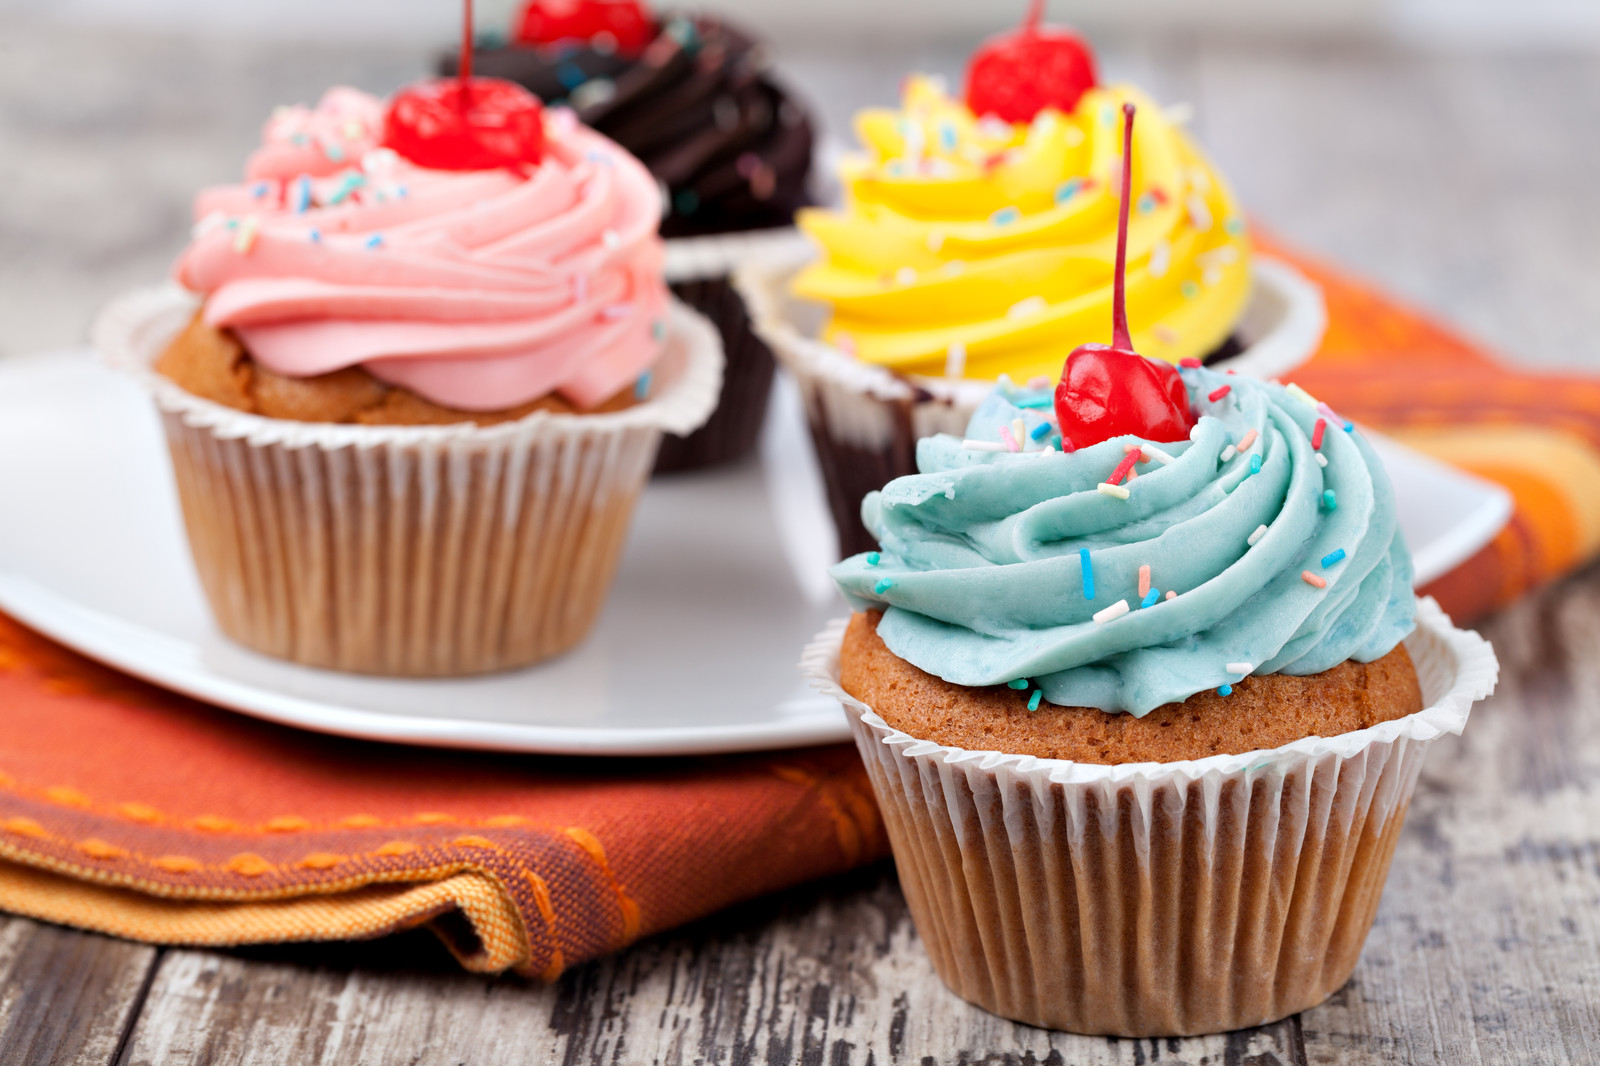 Cupcakes de vainilla sin gluten | Blog de DIA